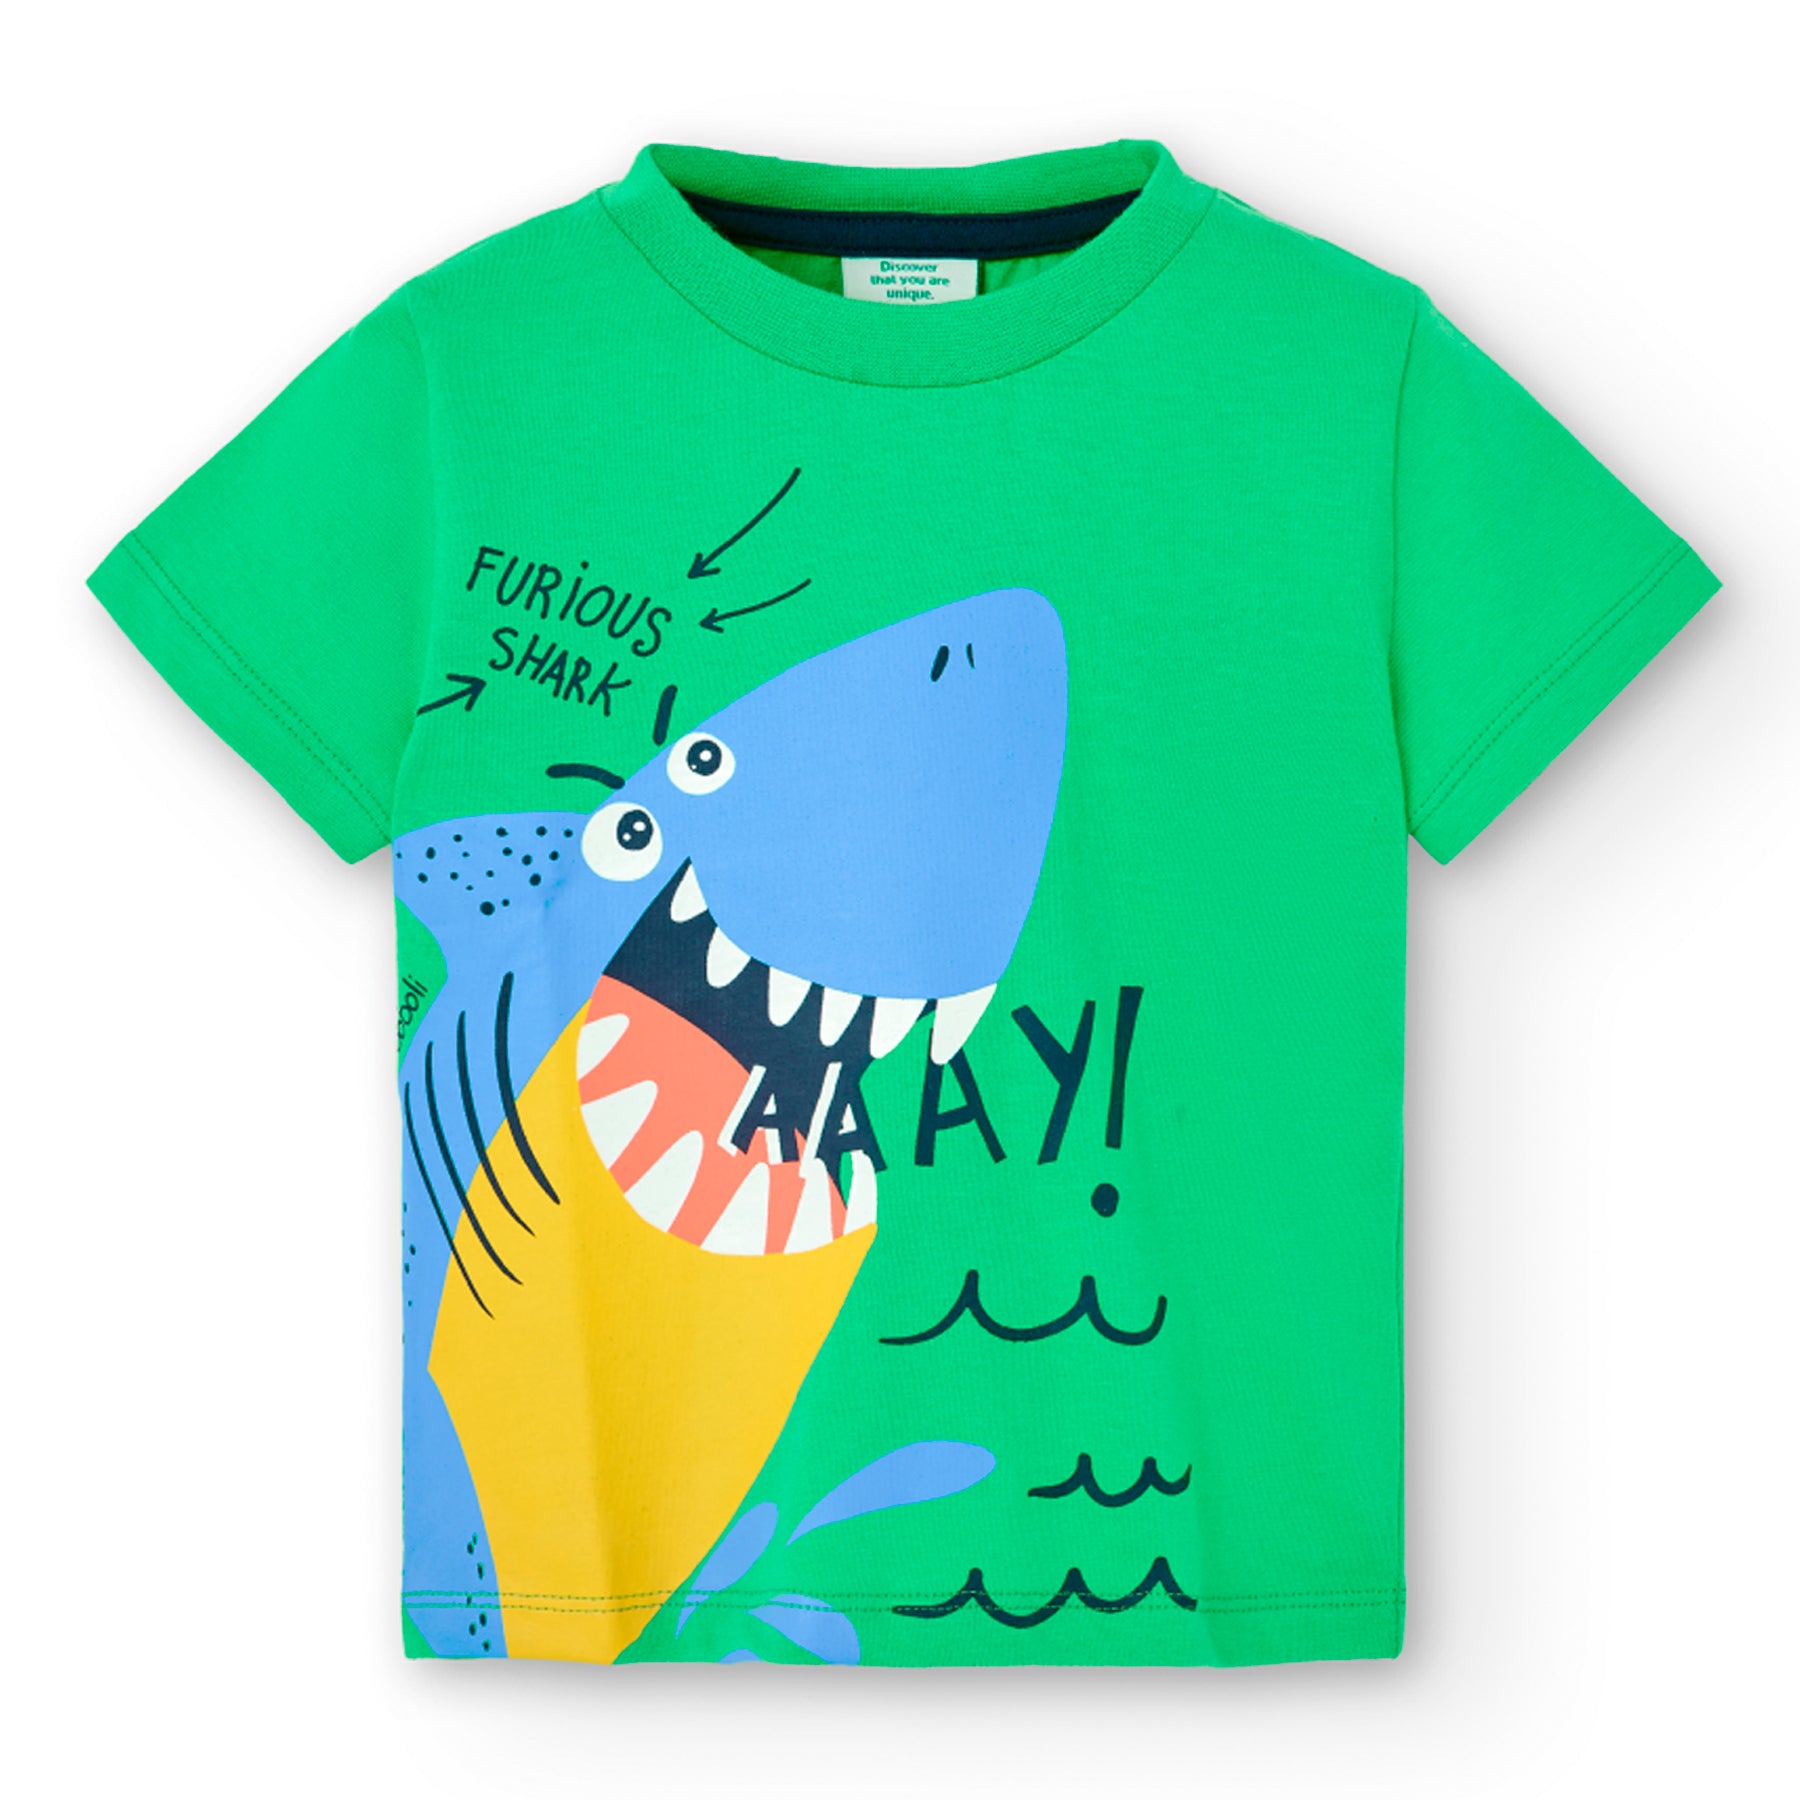 Camiseta Tiburon Verde Boboli BOBOLI